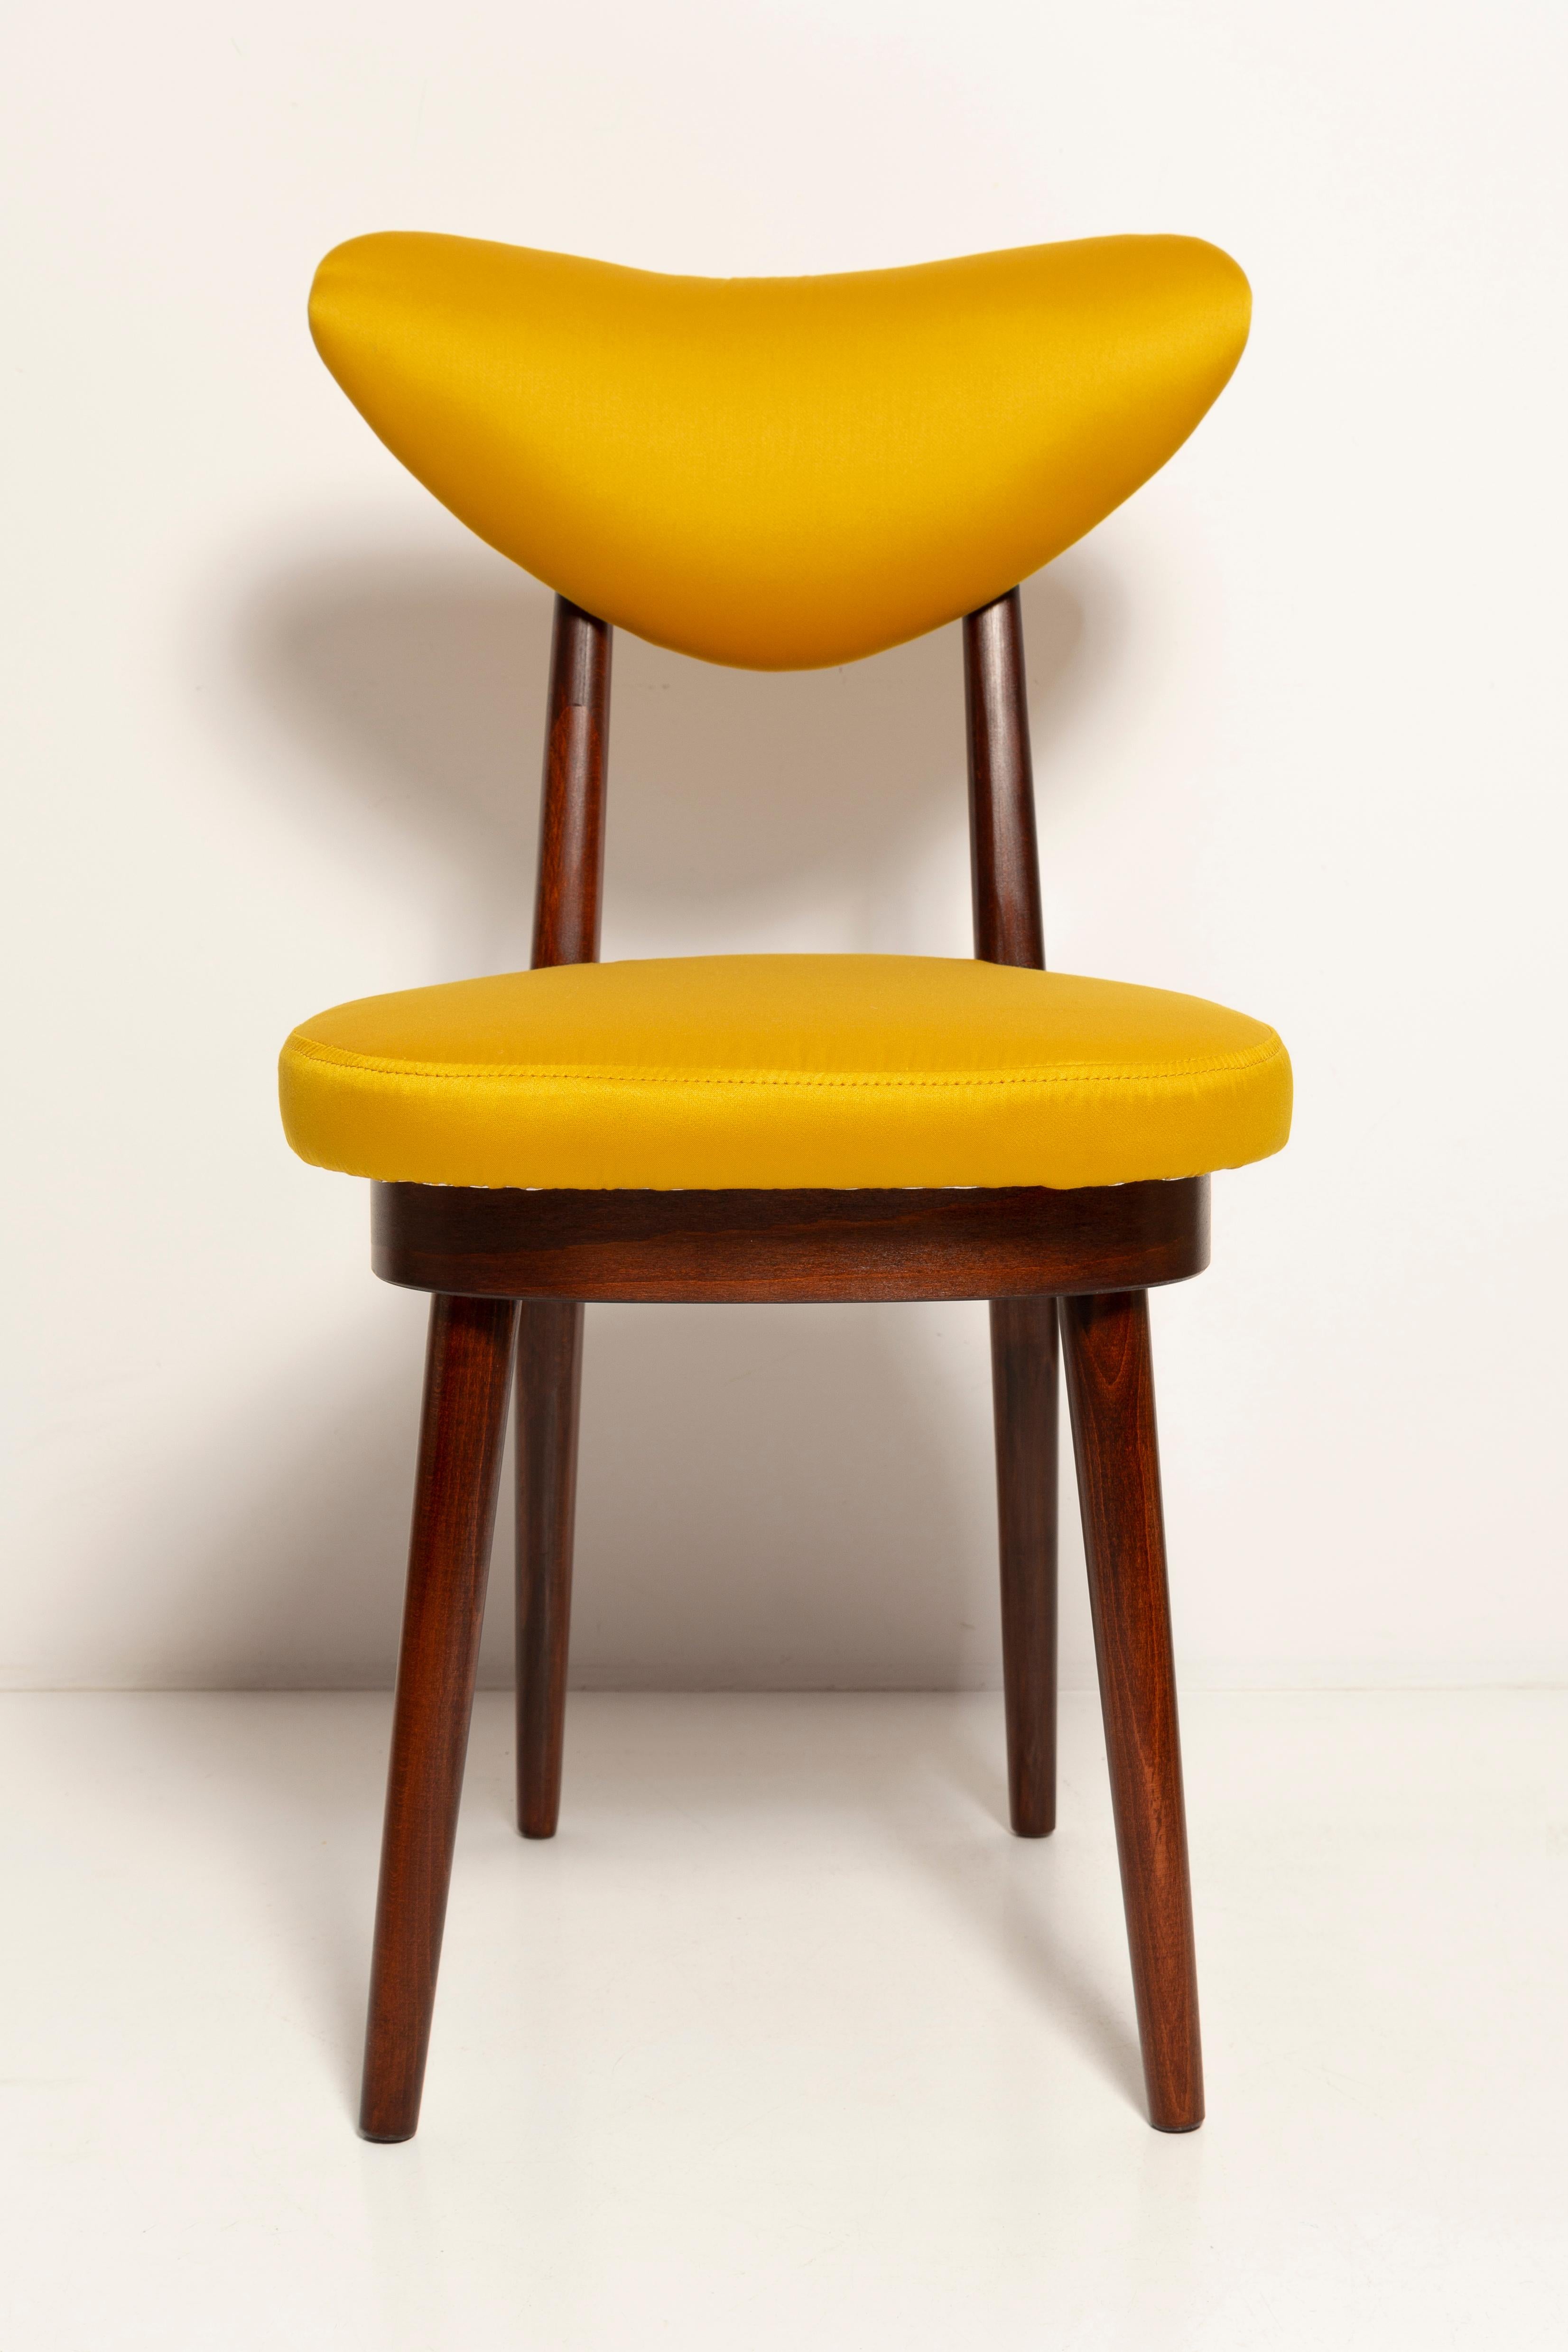 Twelve Midcentury Heart Chairs, Yellow Satin Dedar Gildo Fabric, Europe, 1960s For Sale 4